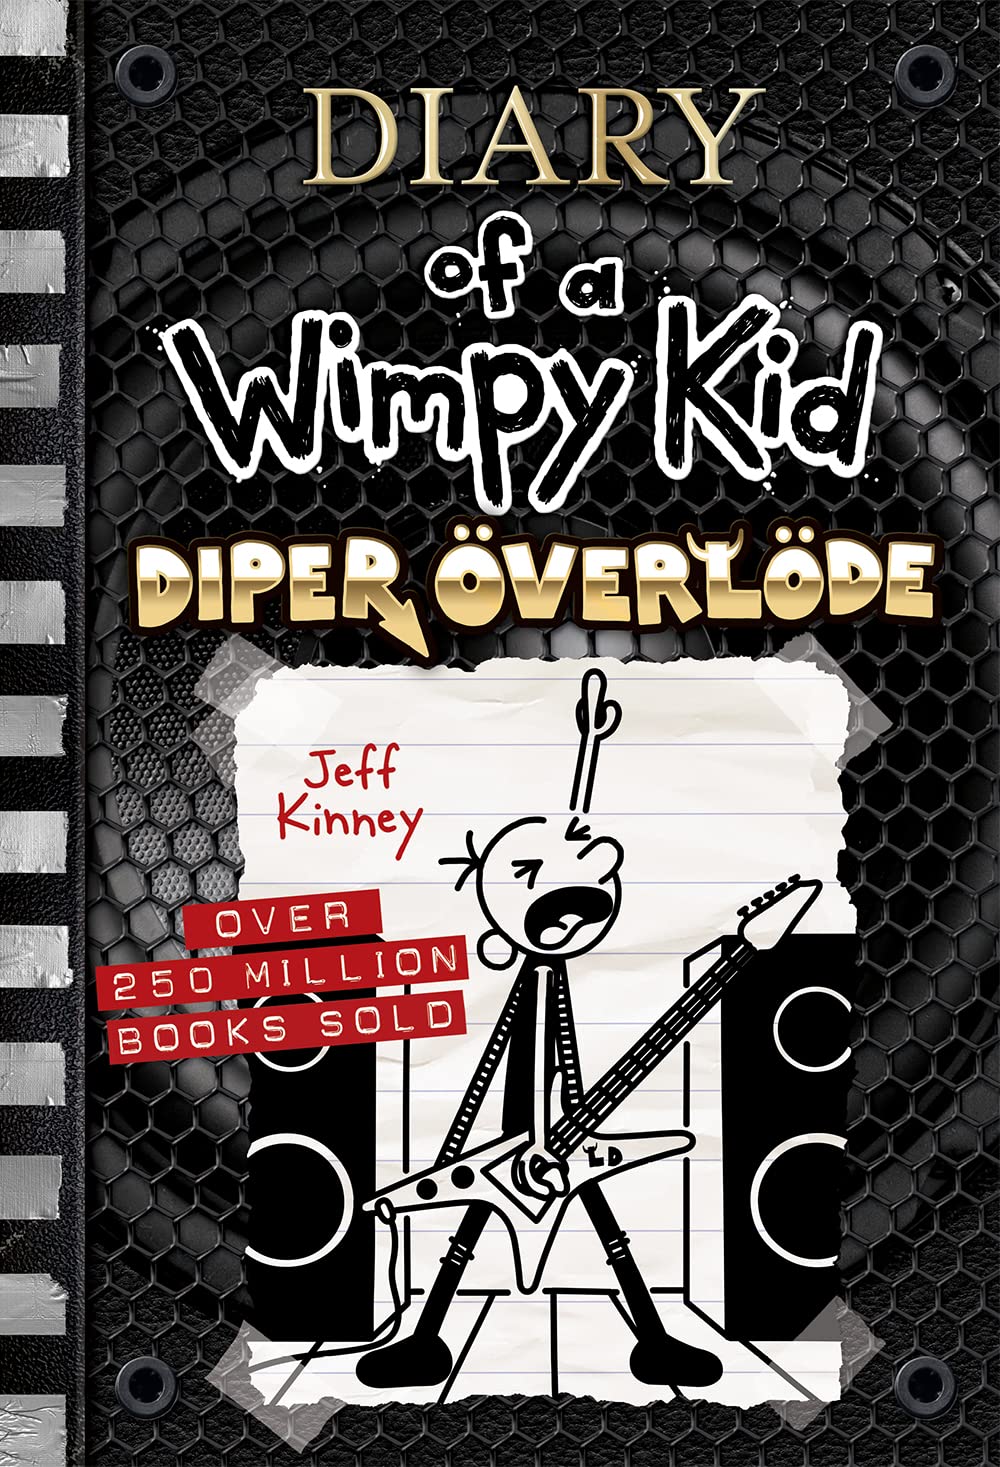 Diary of a Wimpy Kid: Diper Överlöde by Jeff Kinney